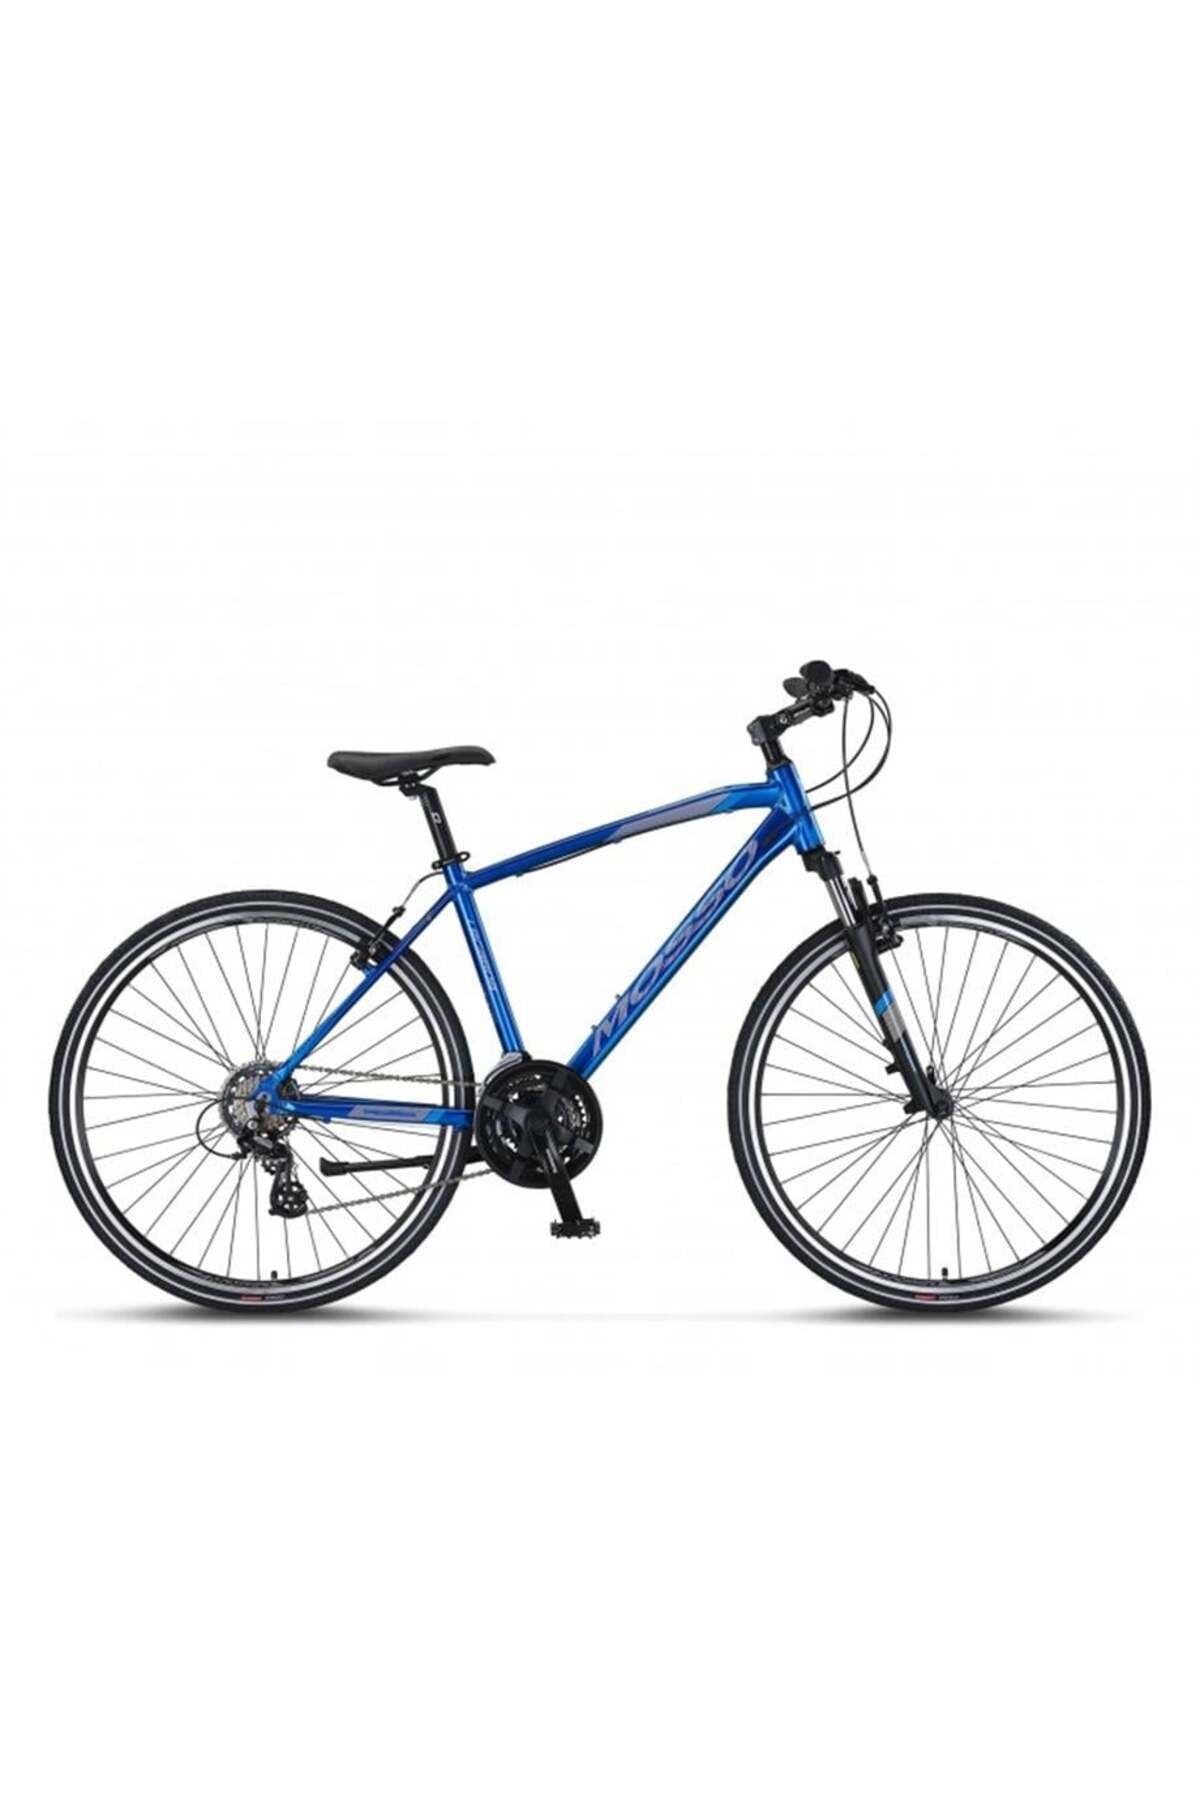 Mosso Legarda-2221-msm-v Erkek Şehir Bisikleti 410h 28 Jant 21 Vites Lacivert Mavi